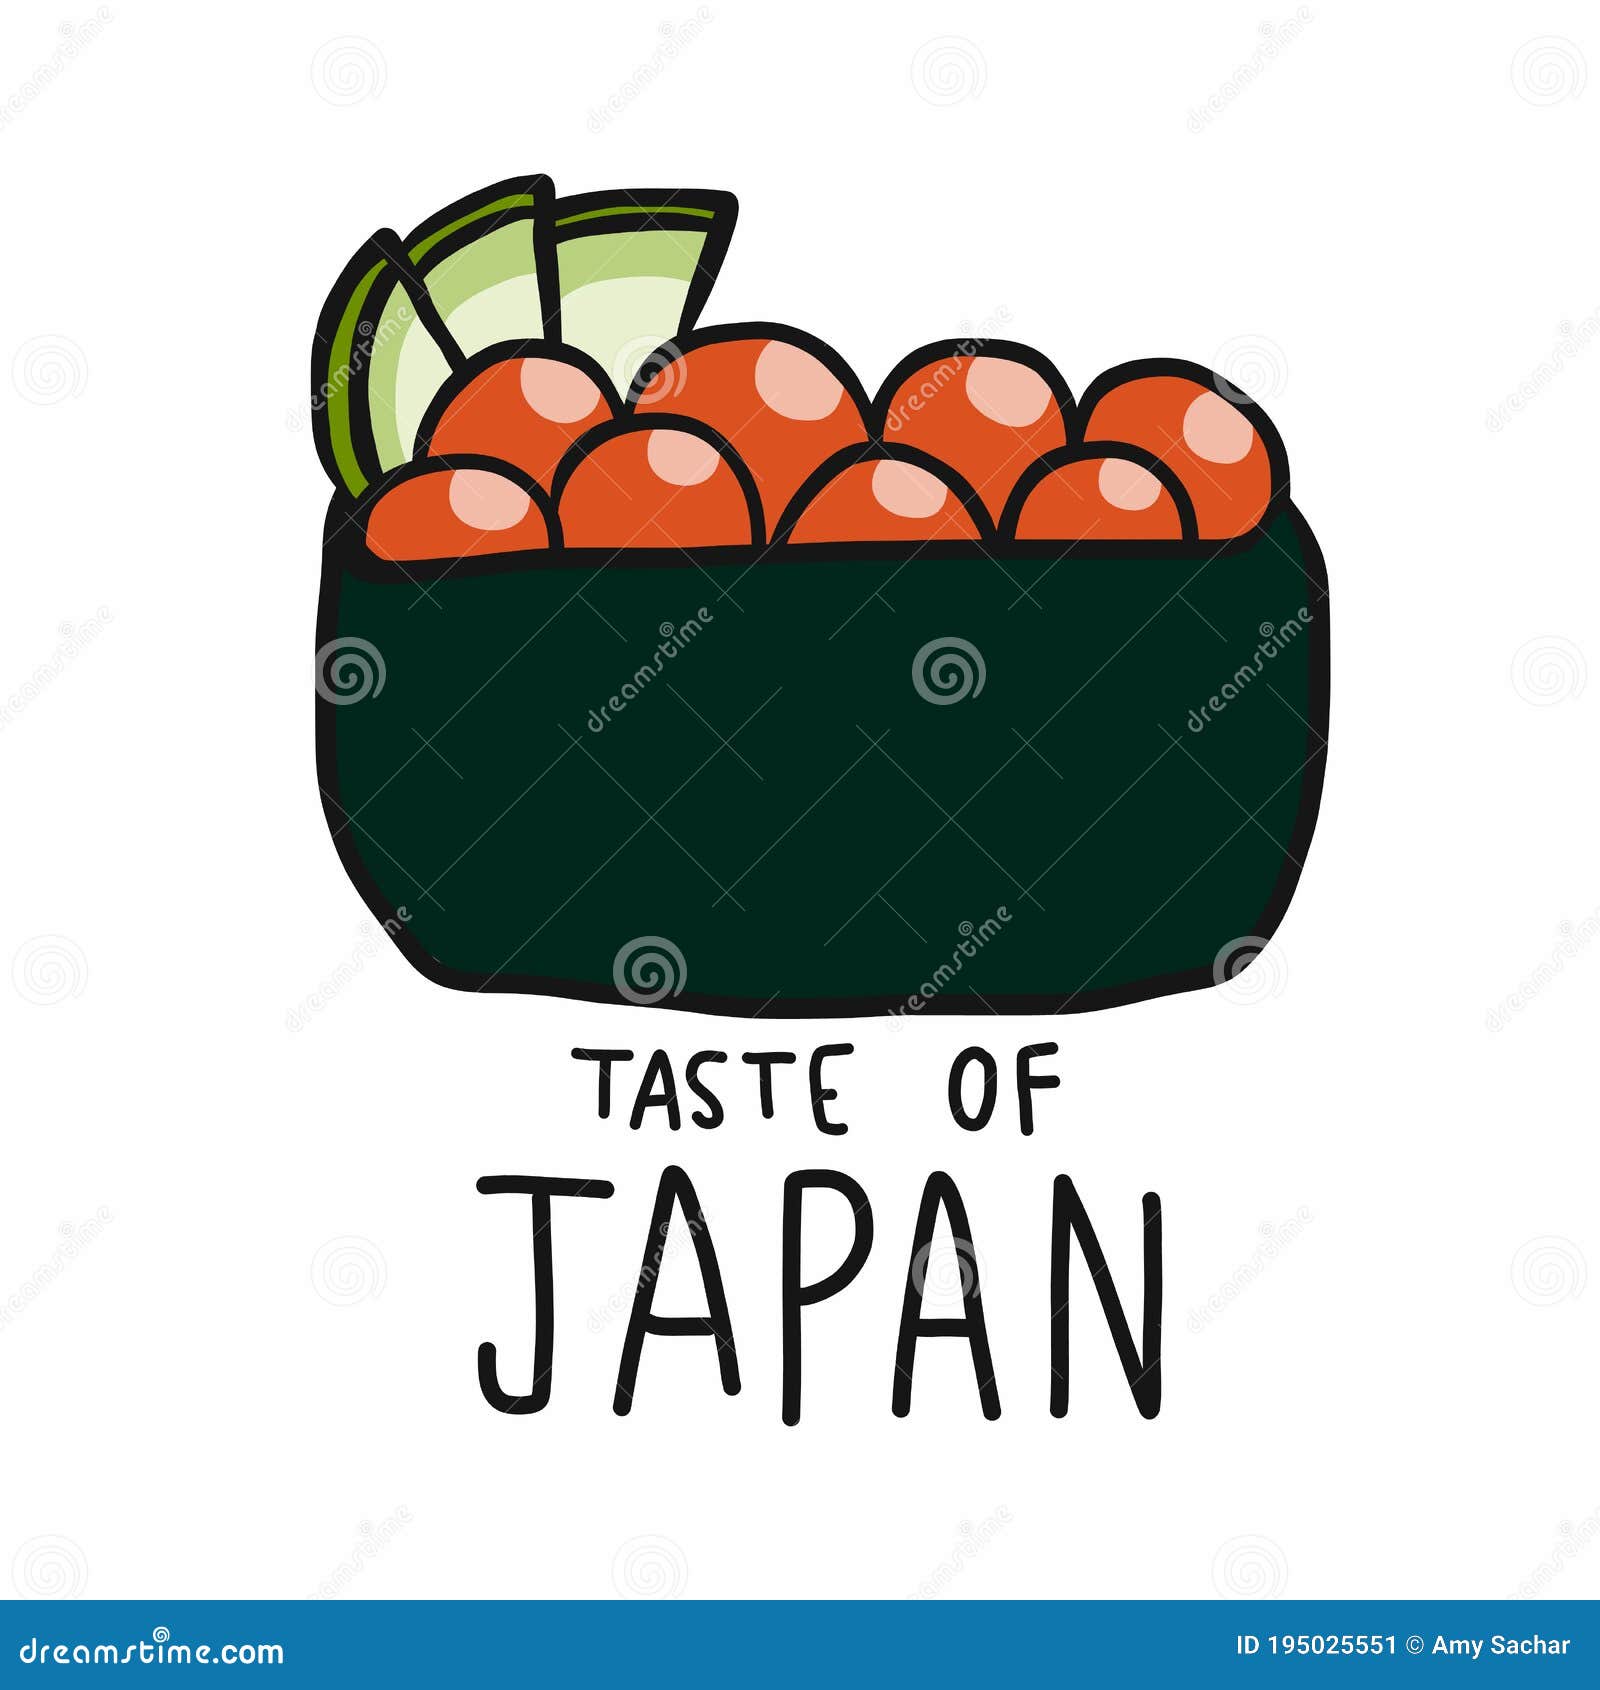 Ikura Salmon Eggs Sushi Taste of Japan Cartoon Illustration Stock Vector -  Illustration of asian, meal: 195025551